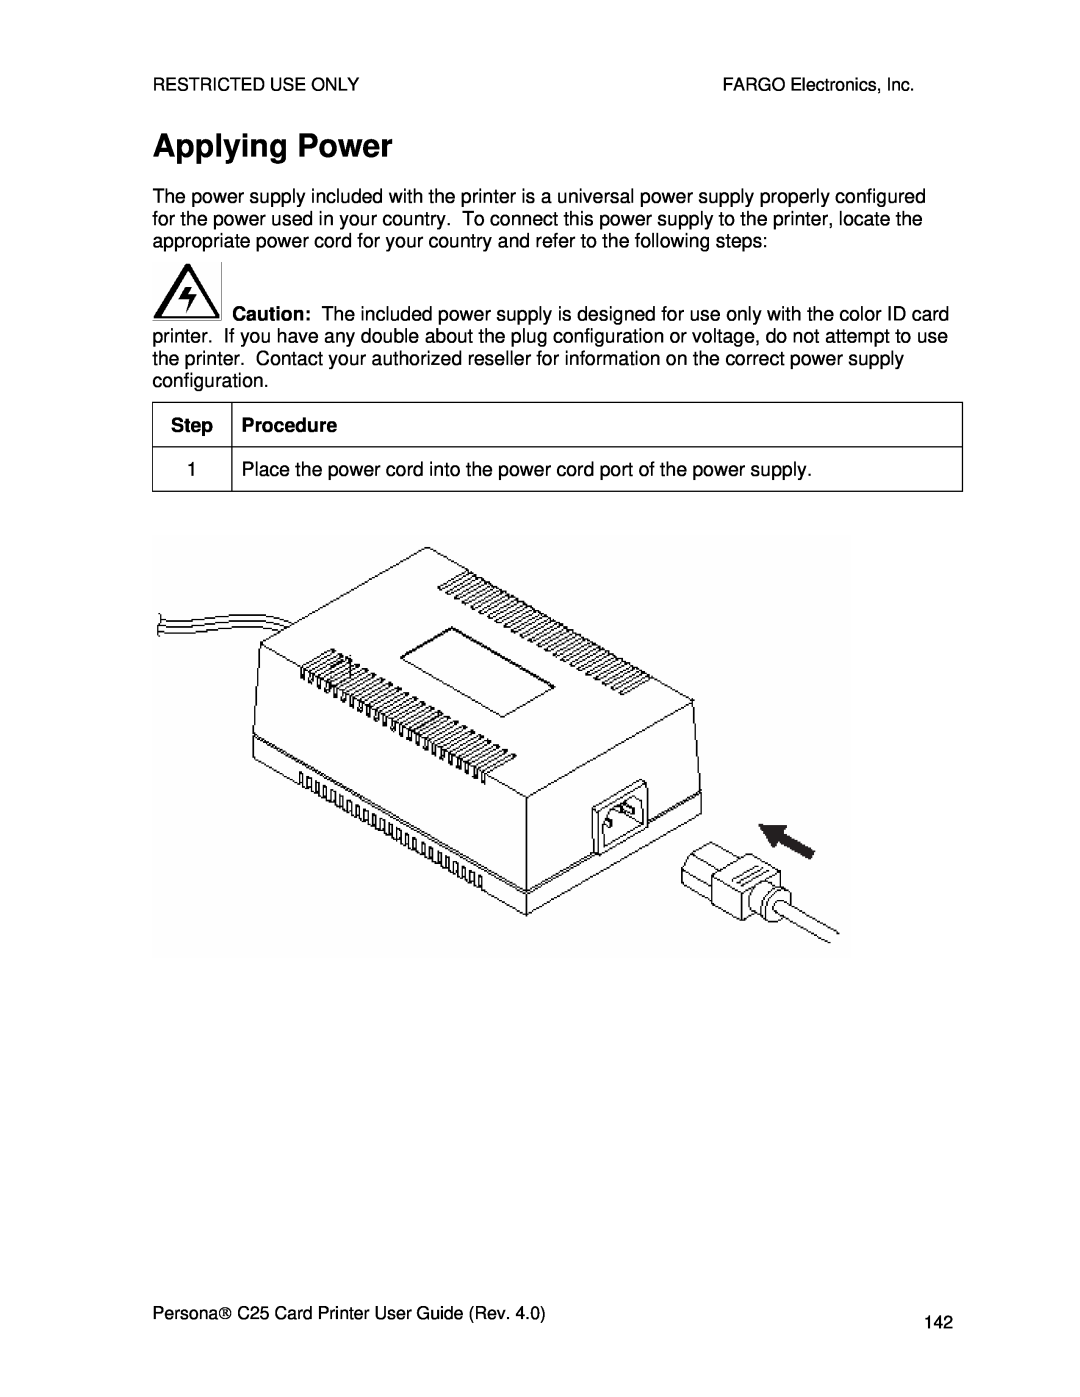 FARGO electronic S000256 manual Applying Power 